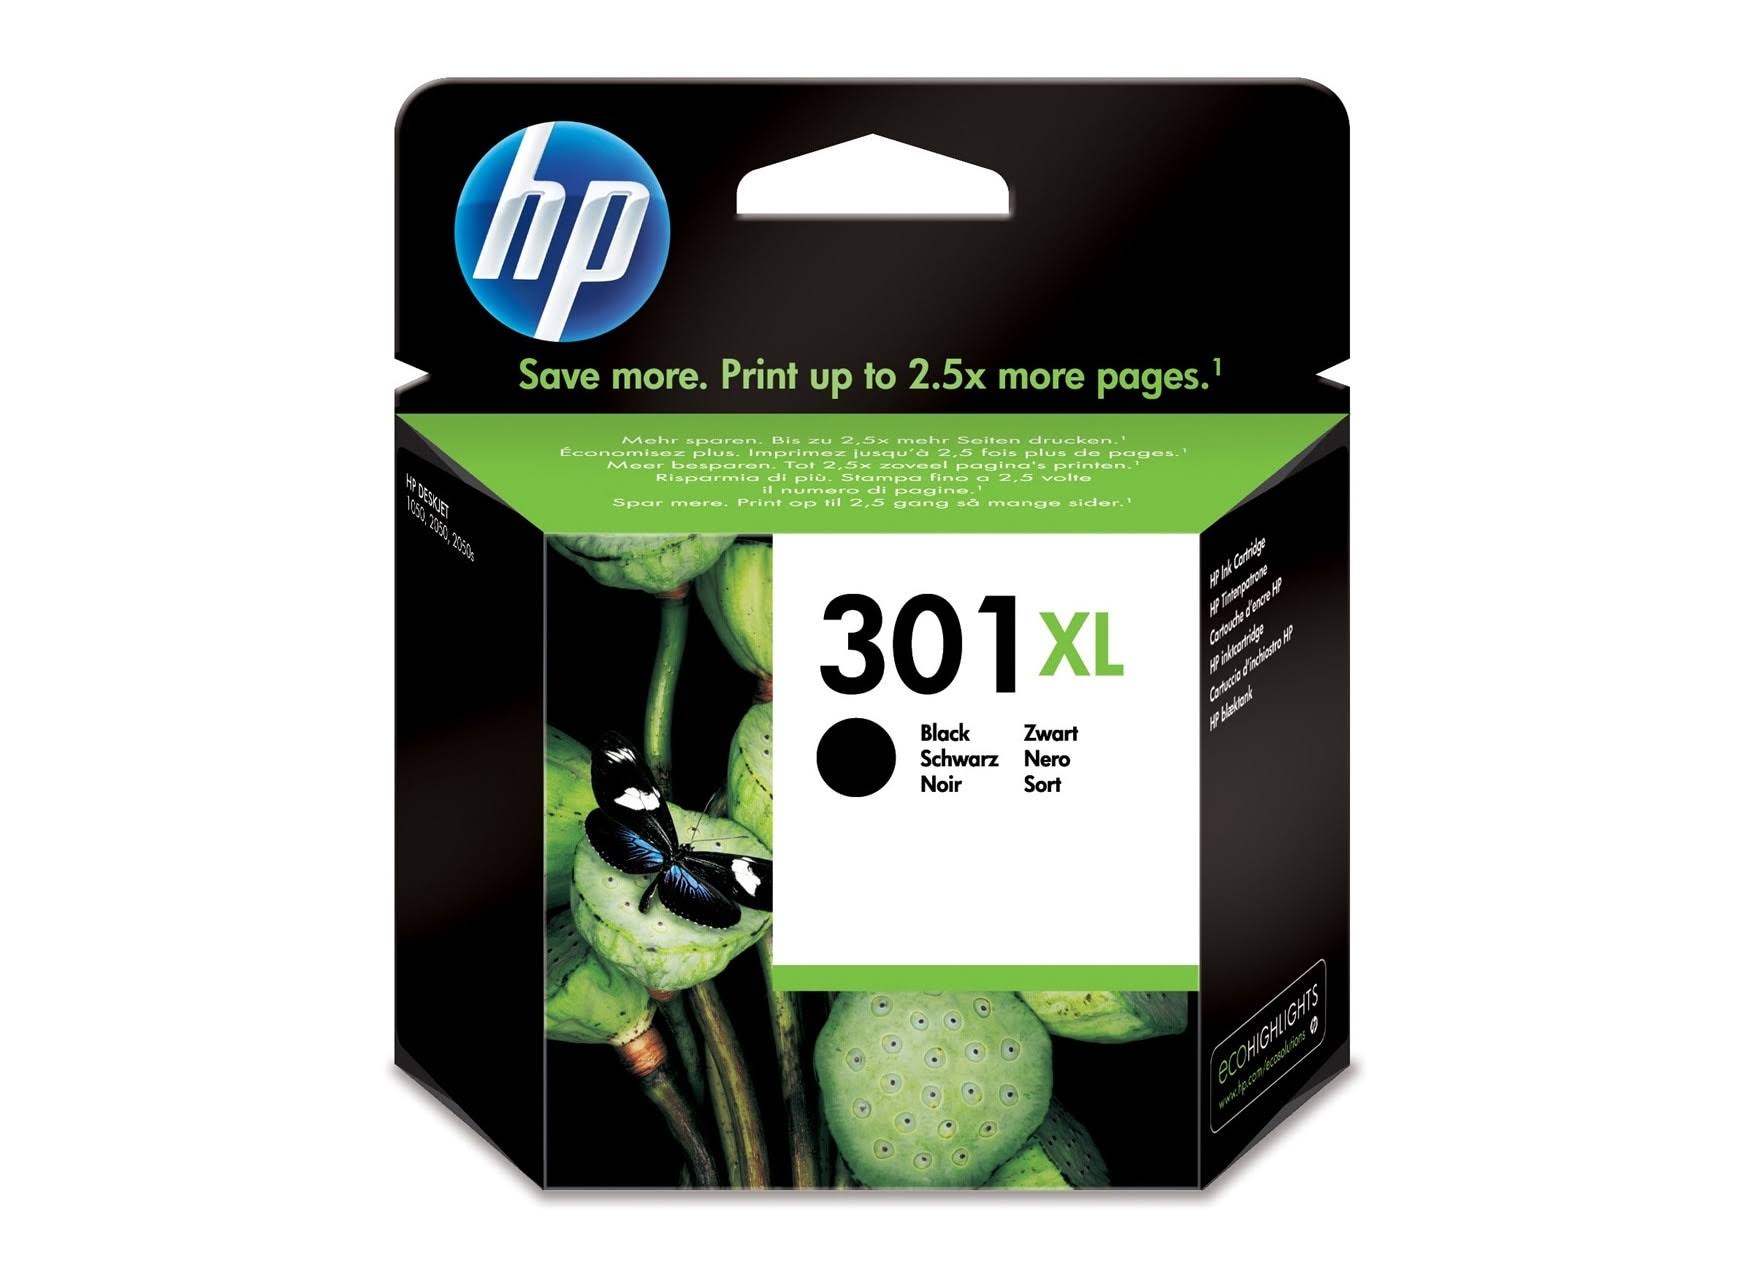 HP 301 XL Printer Ink Cartridge - Black